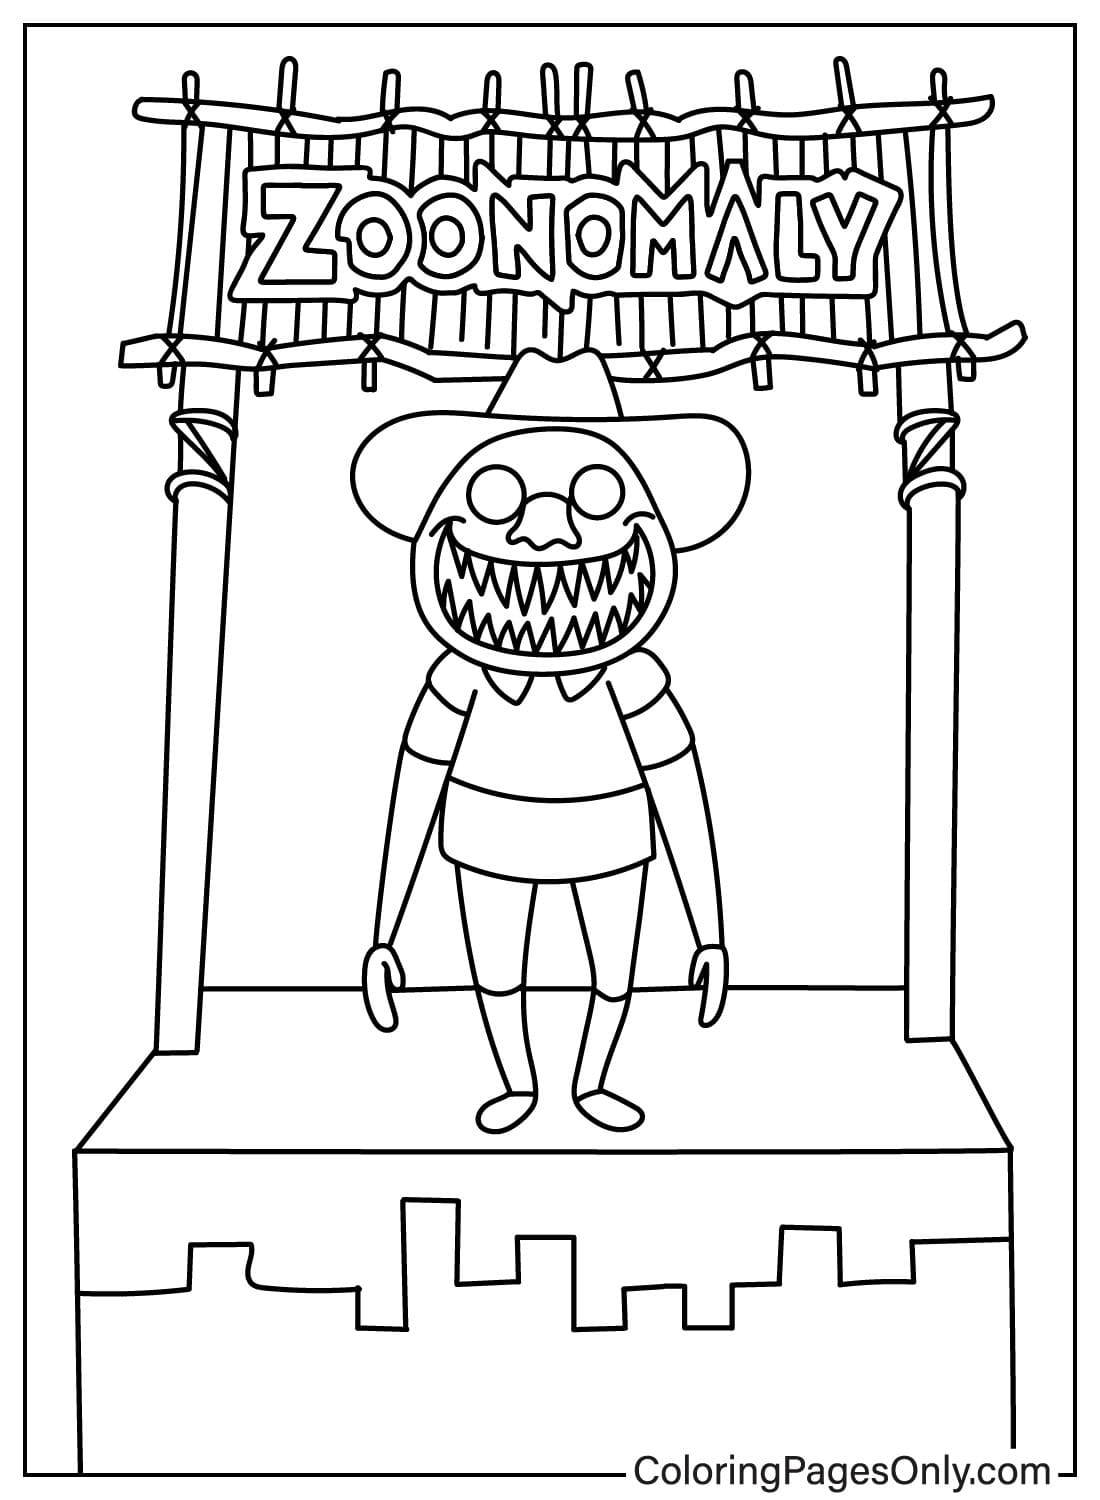 Imagens de zoonomalia para colorir a partir de zoonomalia